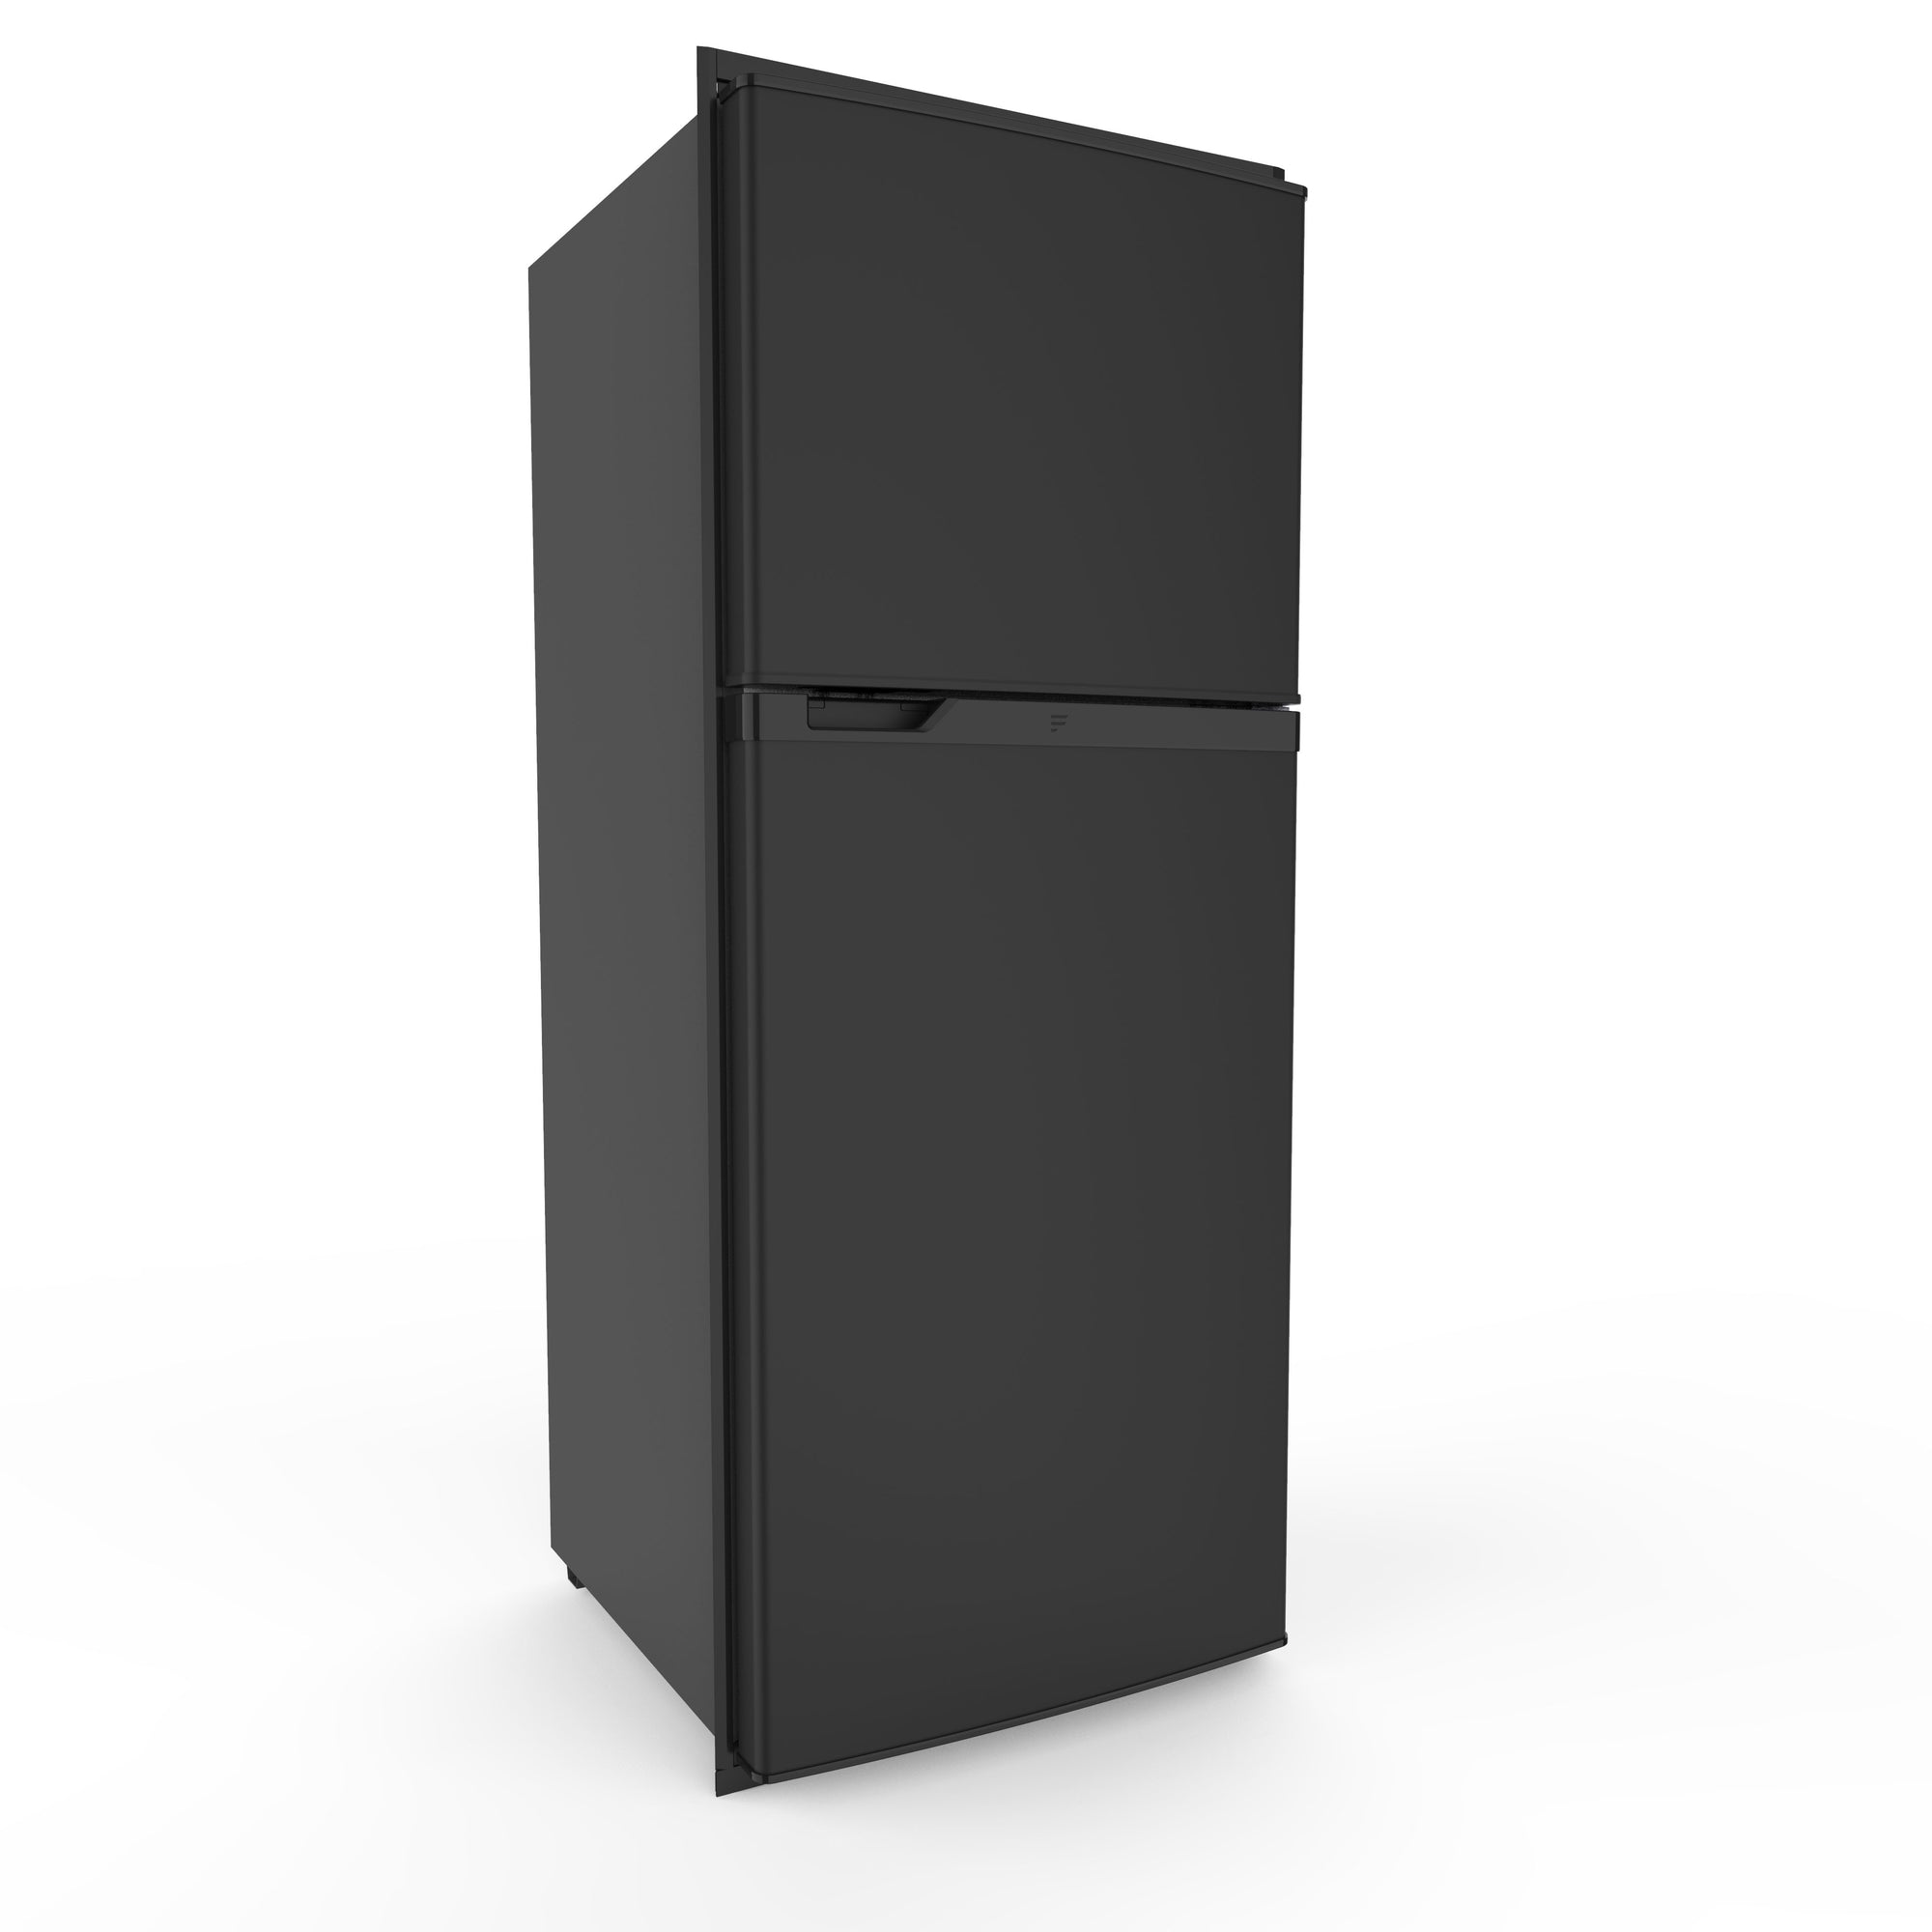 Furrion 2021123811 Arctic 12-Volt RV Refrigerator - 10 cu.ft., Black, Right Hand Hinge